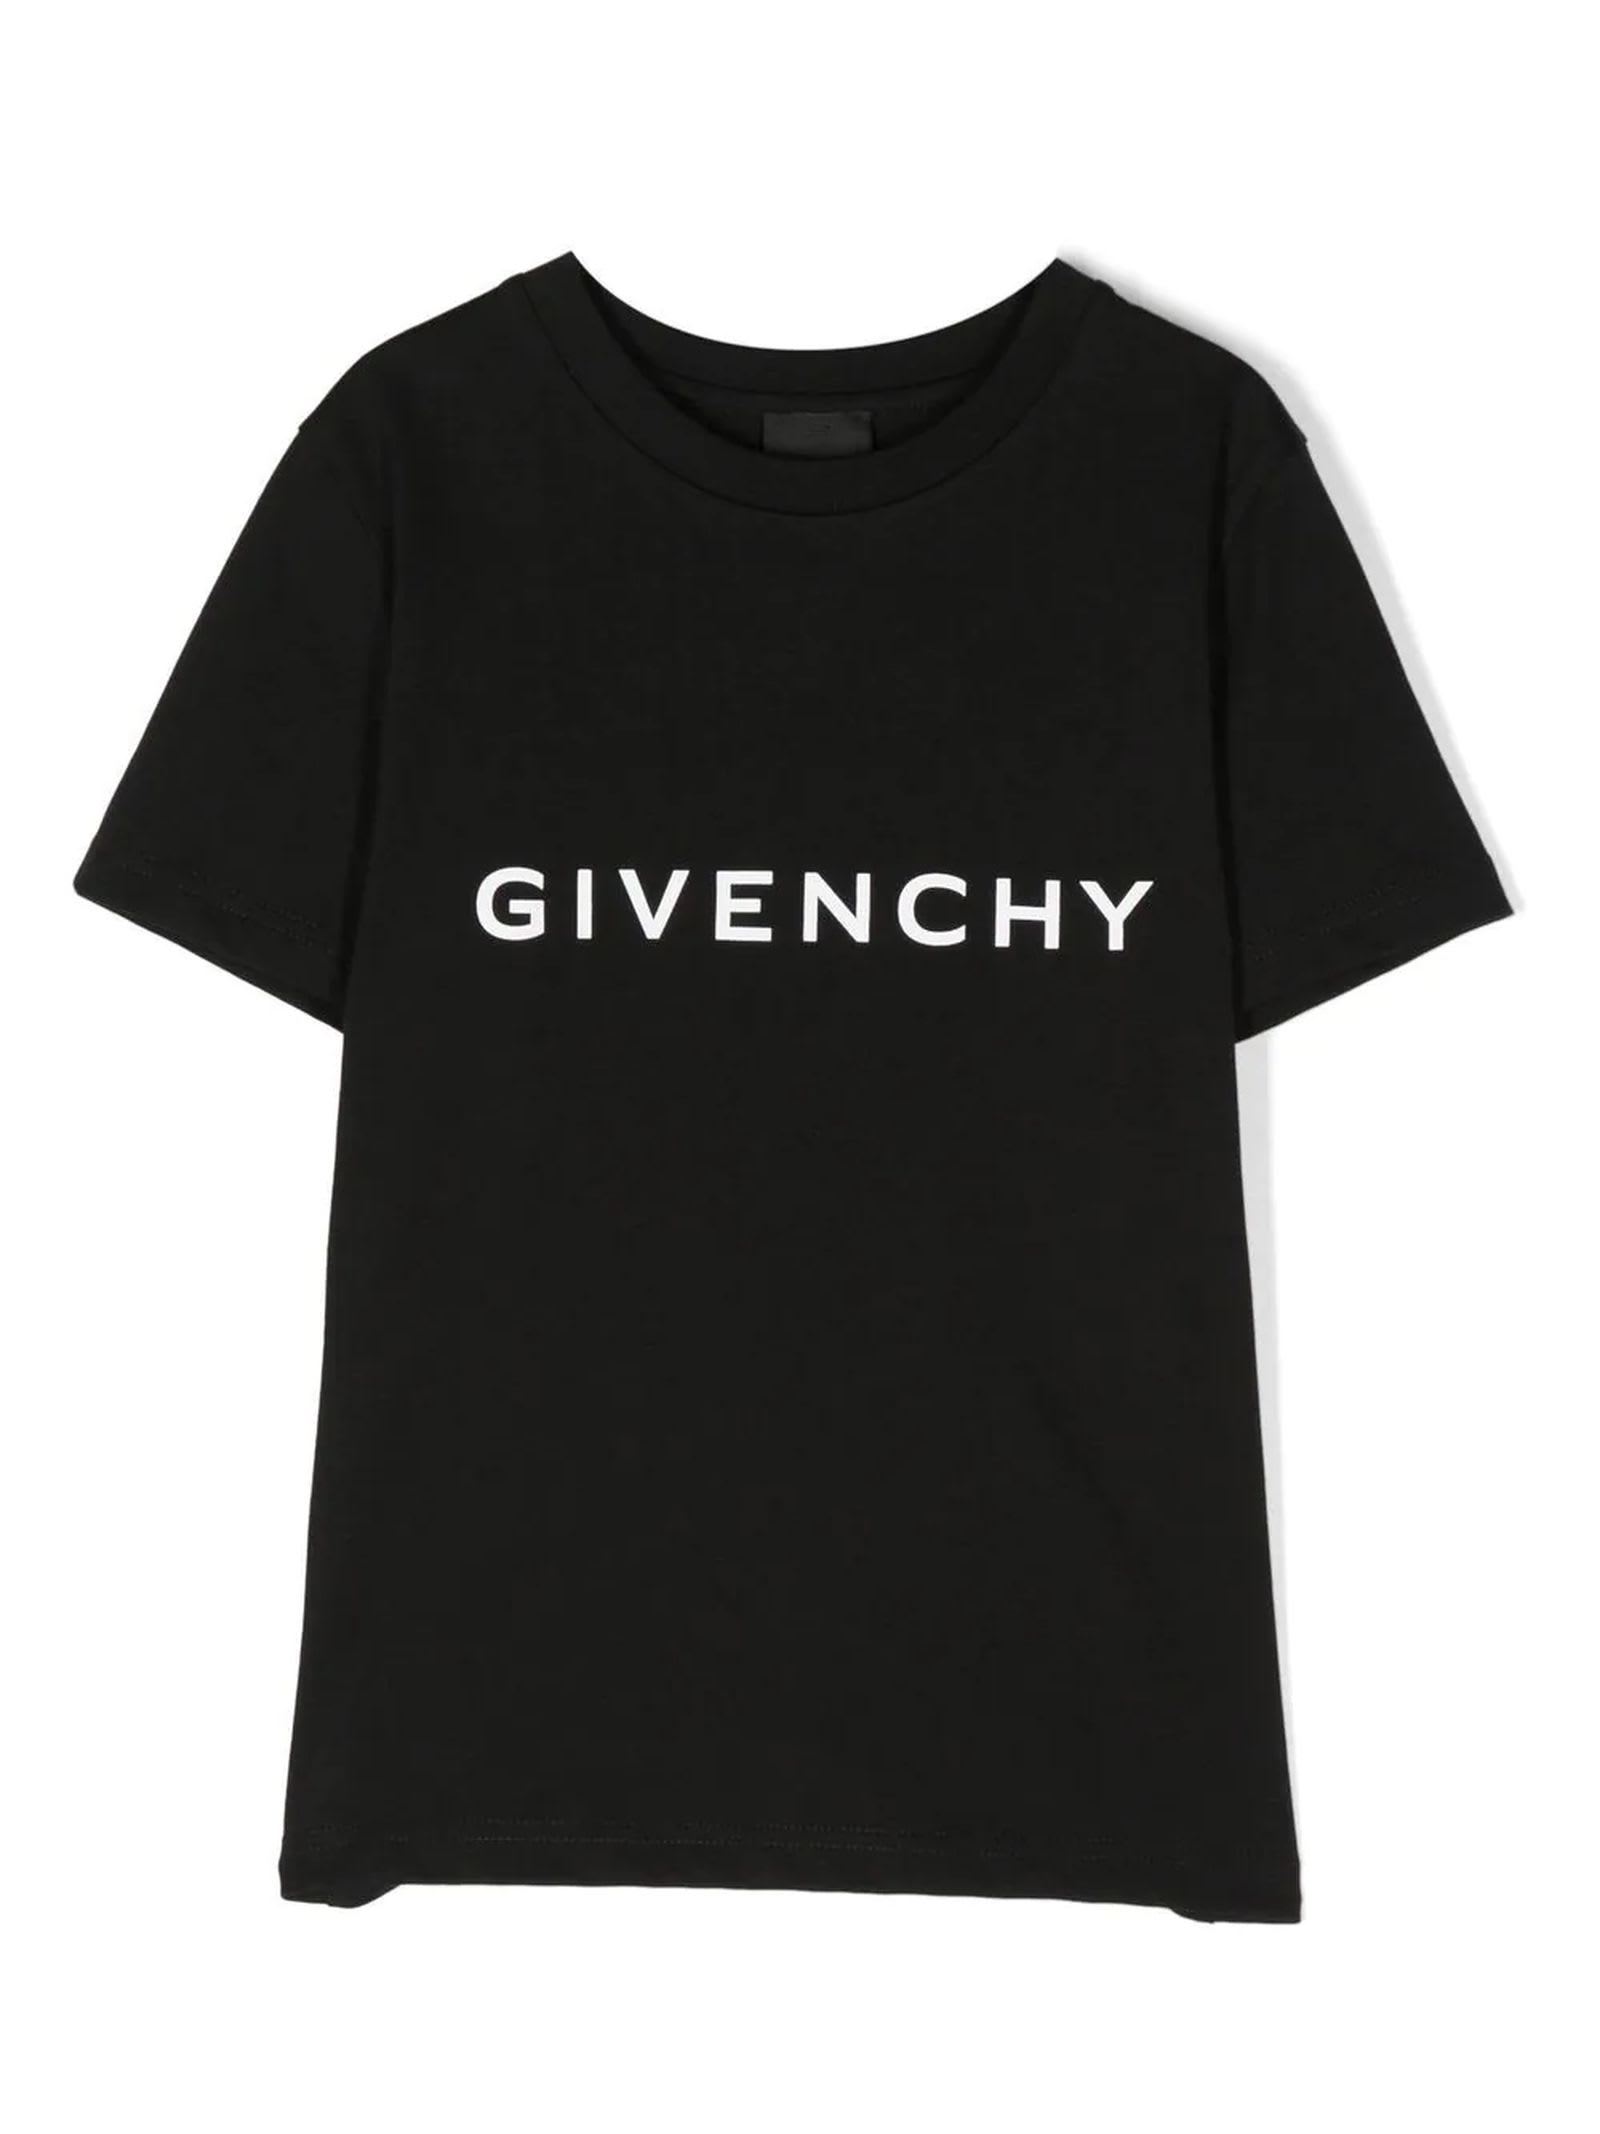 Givenchy Black Cotton Tshirt